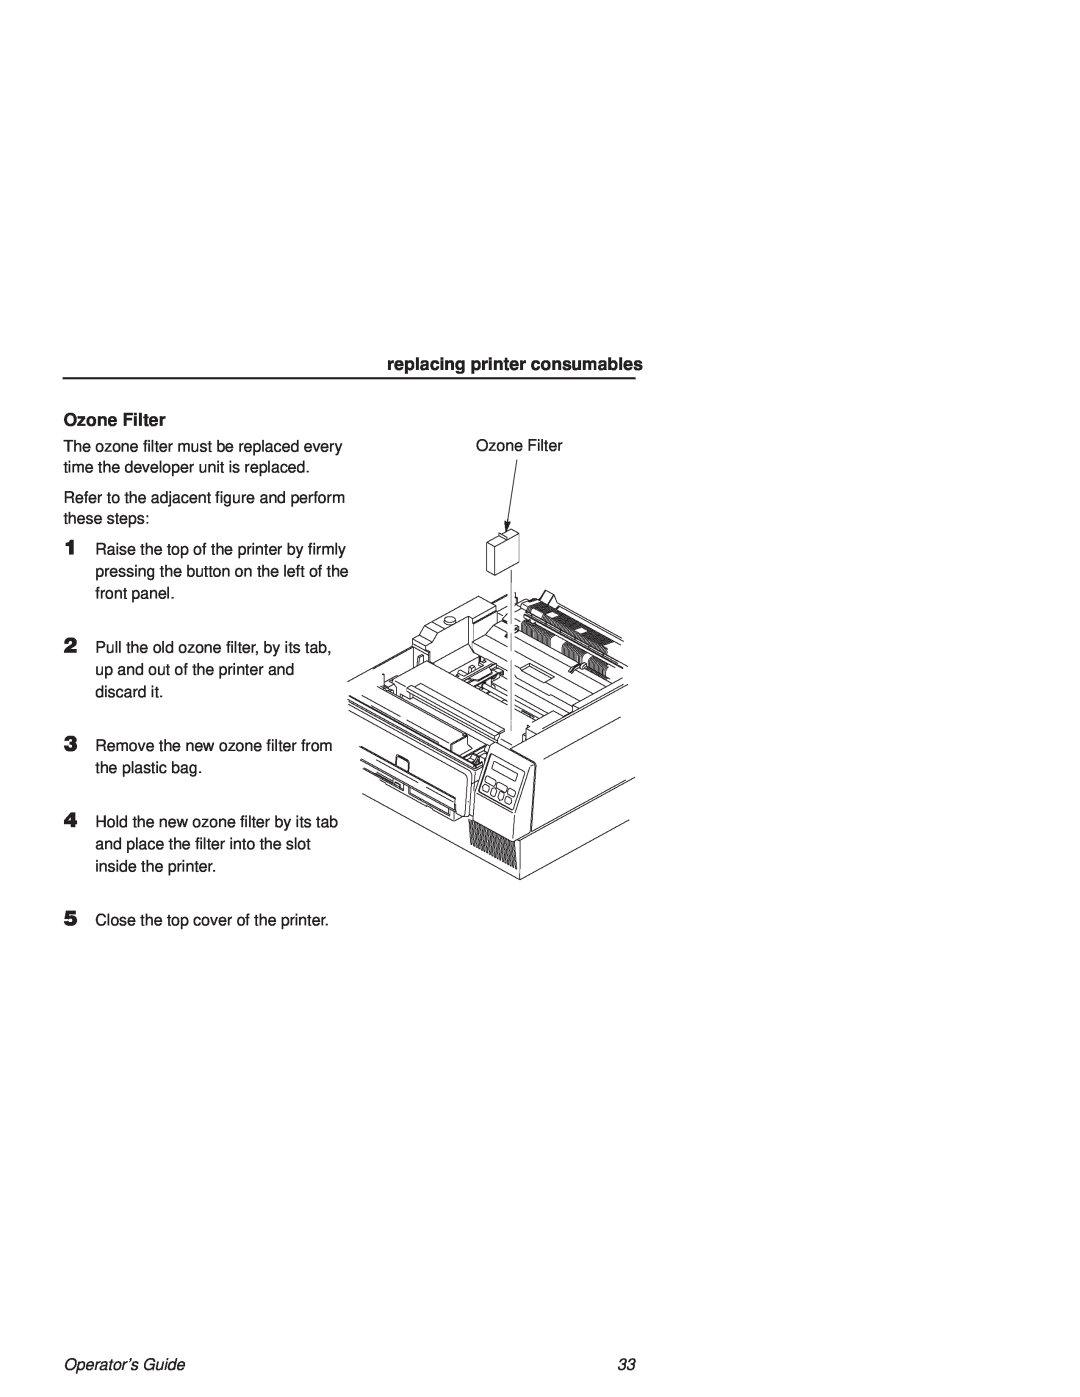 Printronix L1524 manual replacing printer consumables, Ozone Filter, Operators Guide 